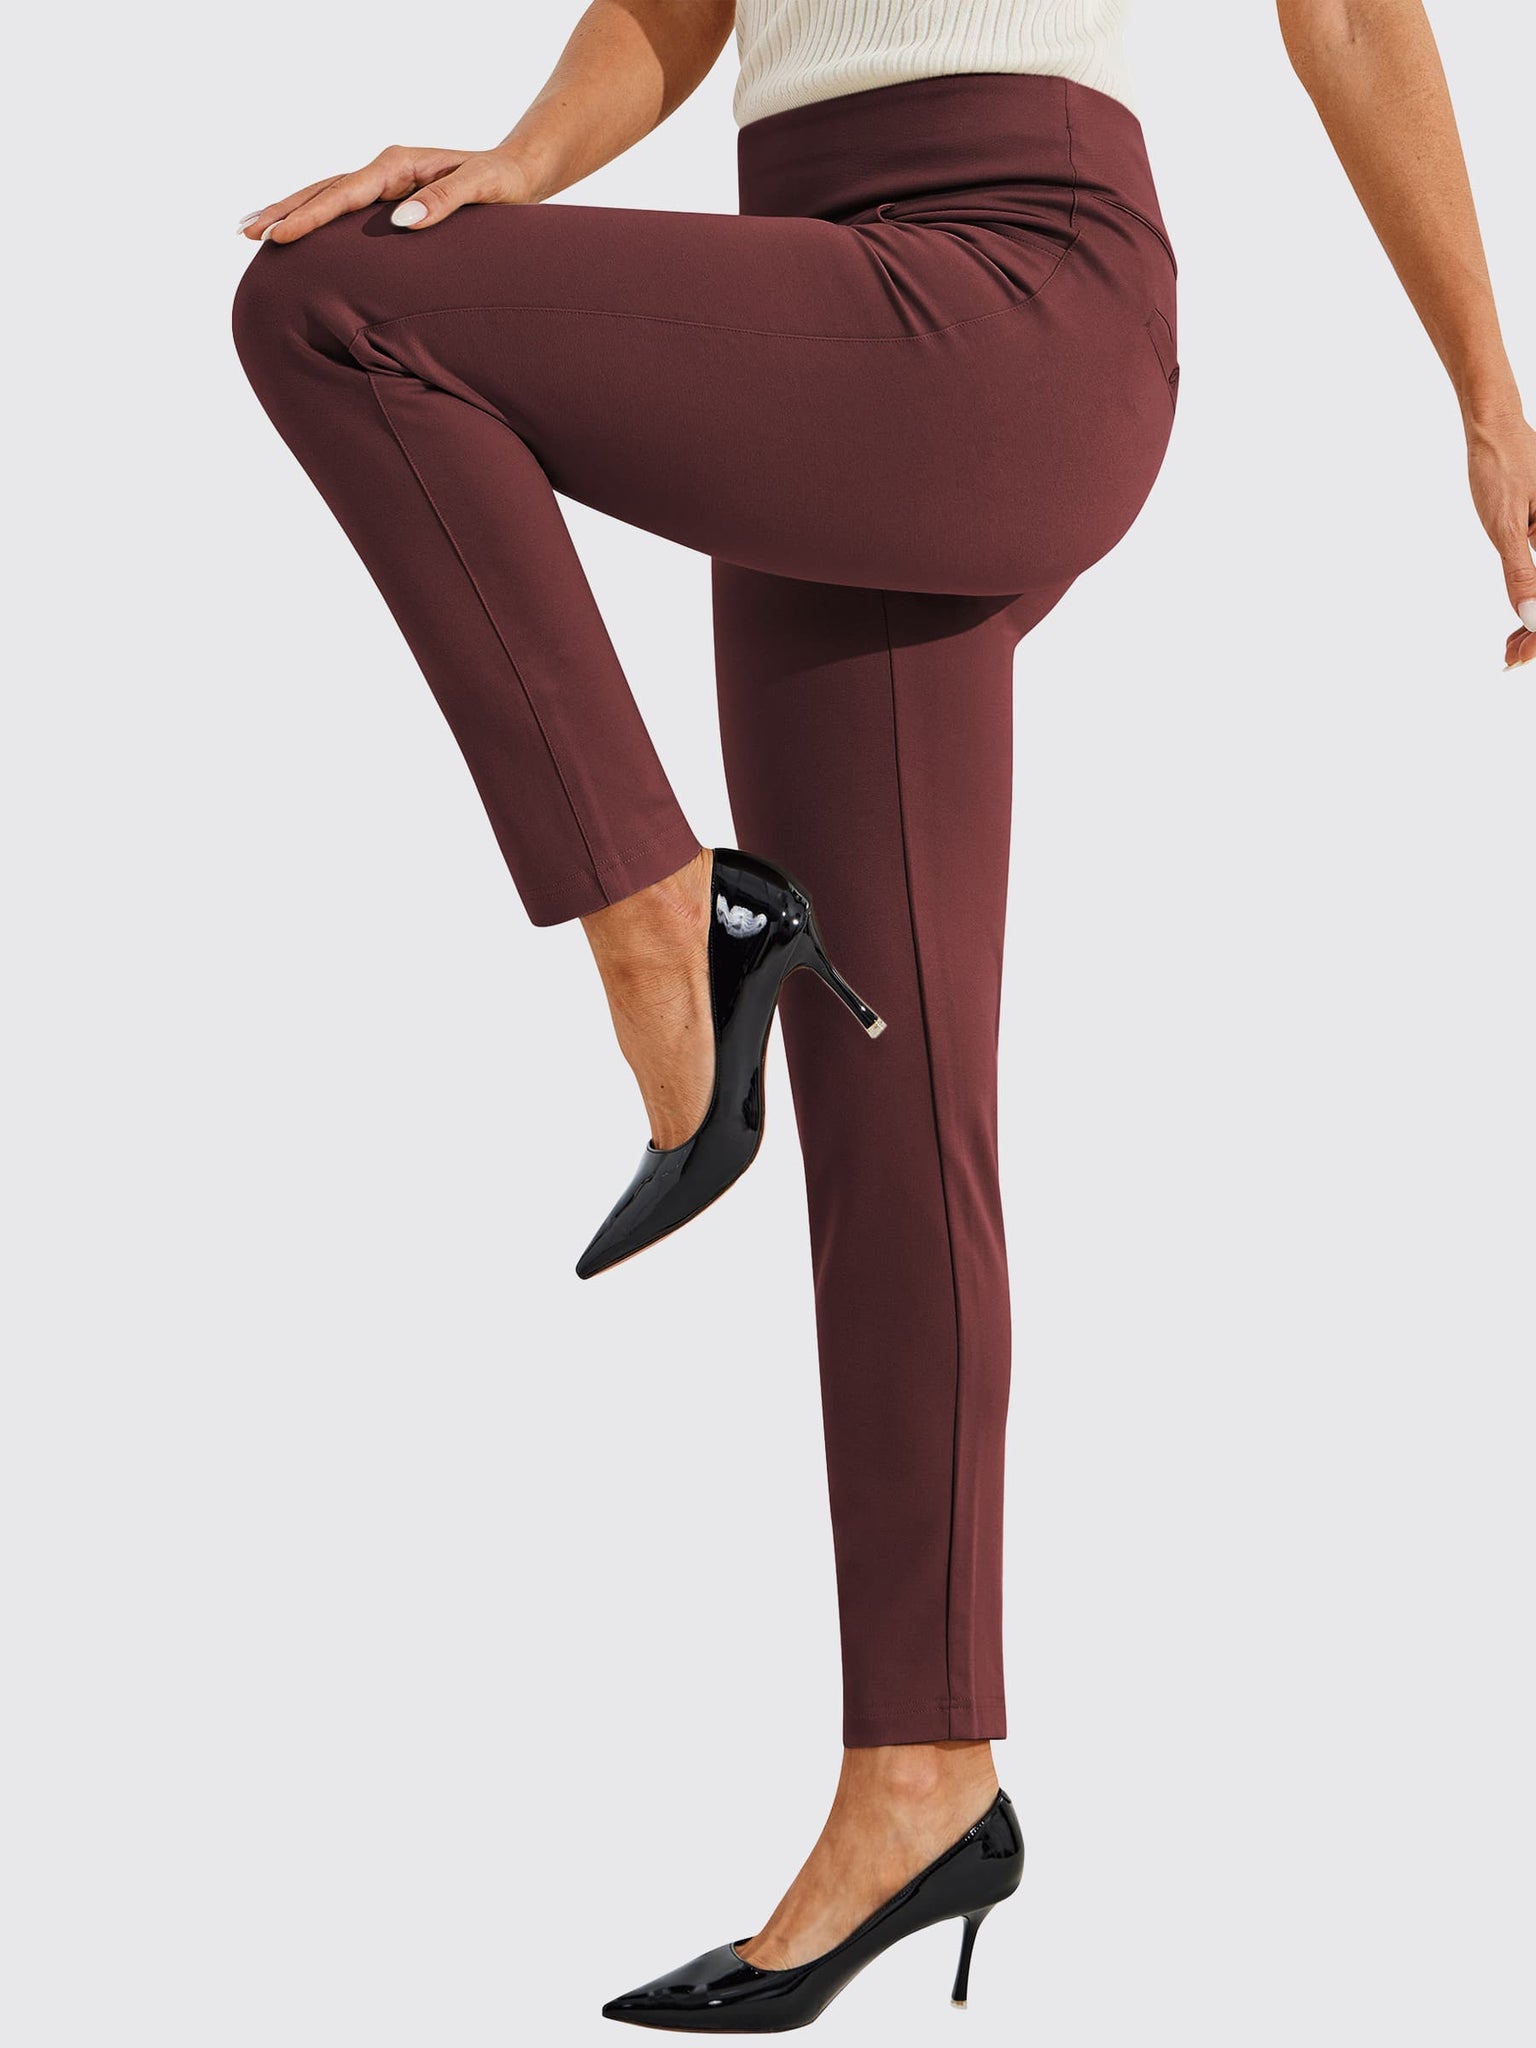 Willit Women's Yoga Dress Pants Bootcut Work Slacks Pants Stretch Office  Casual Pants Petite/Regular/Long 29/31/33, Khaki, S price in Saudi Arabia,  Saudi Arabia